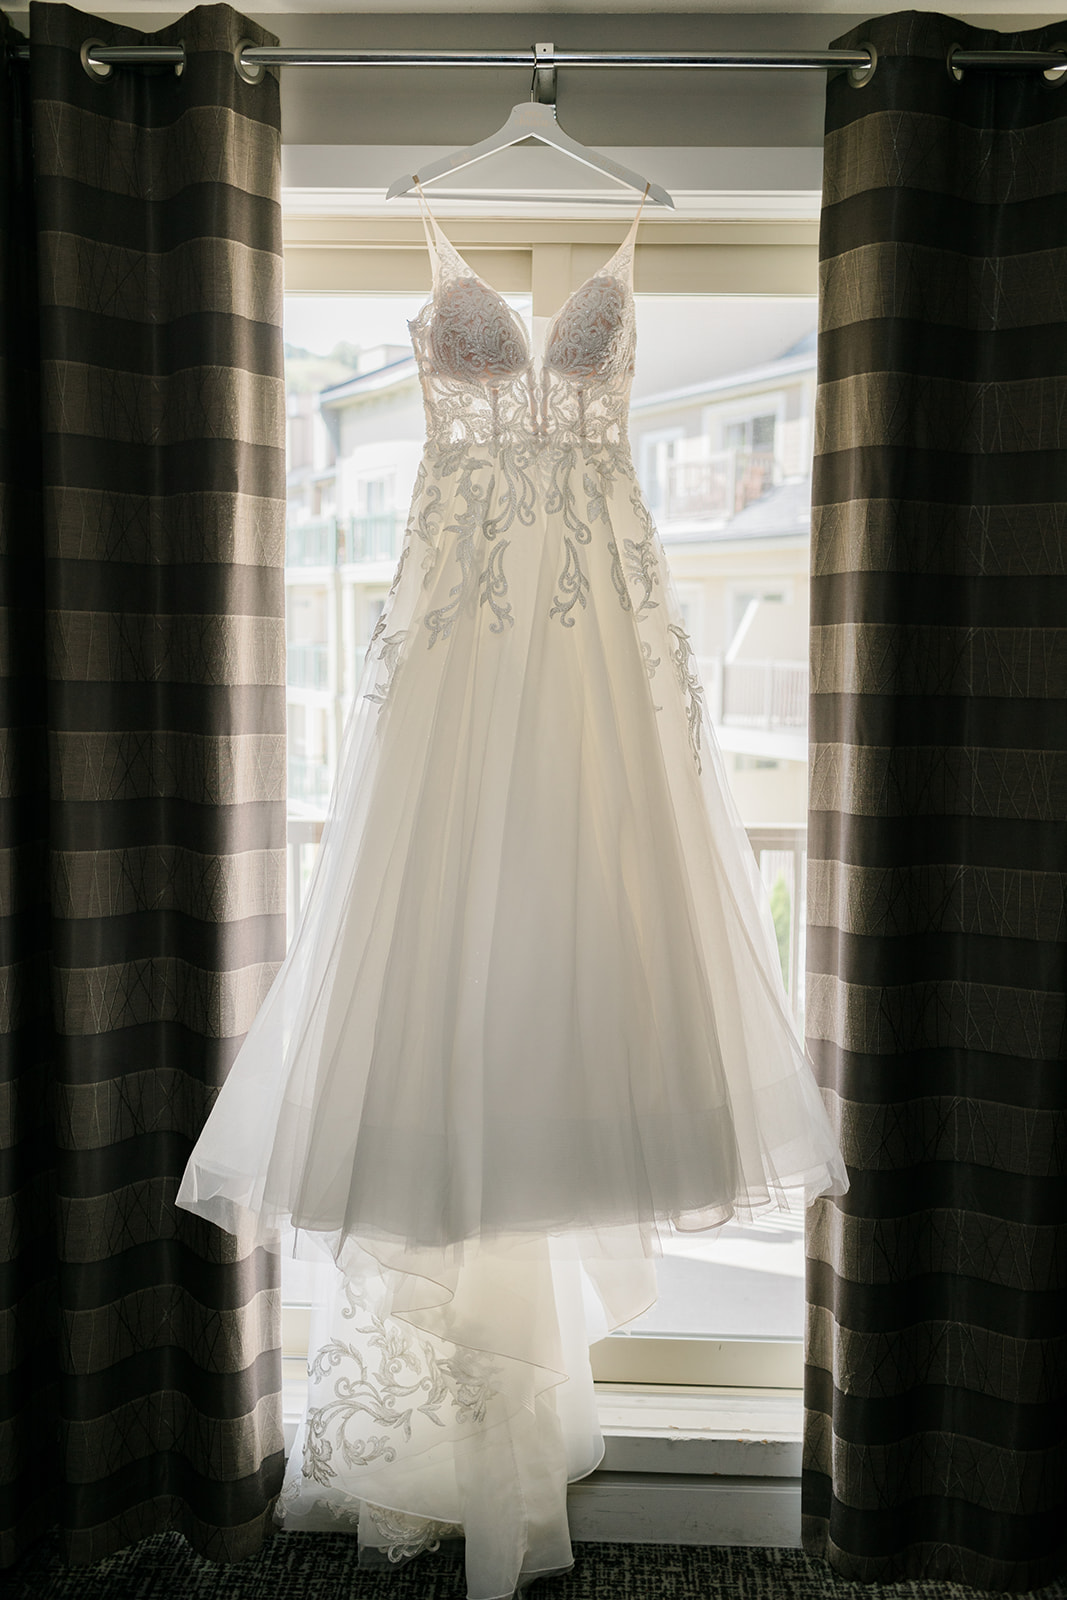 brides dress hanging in windor